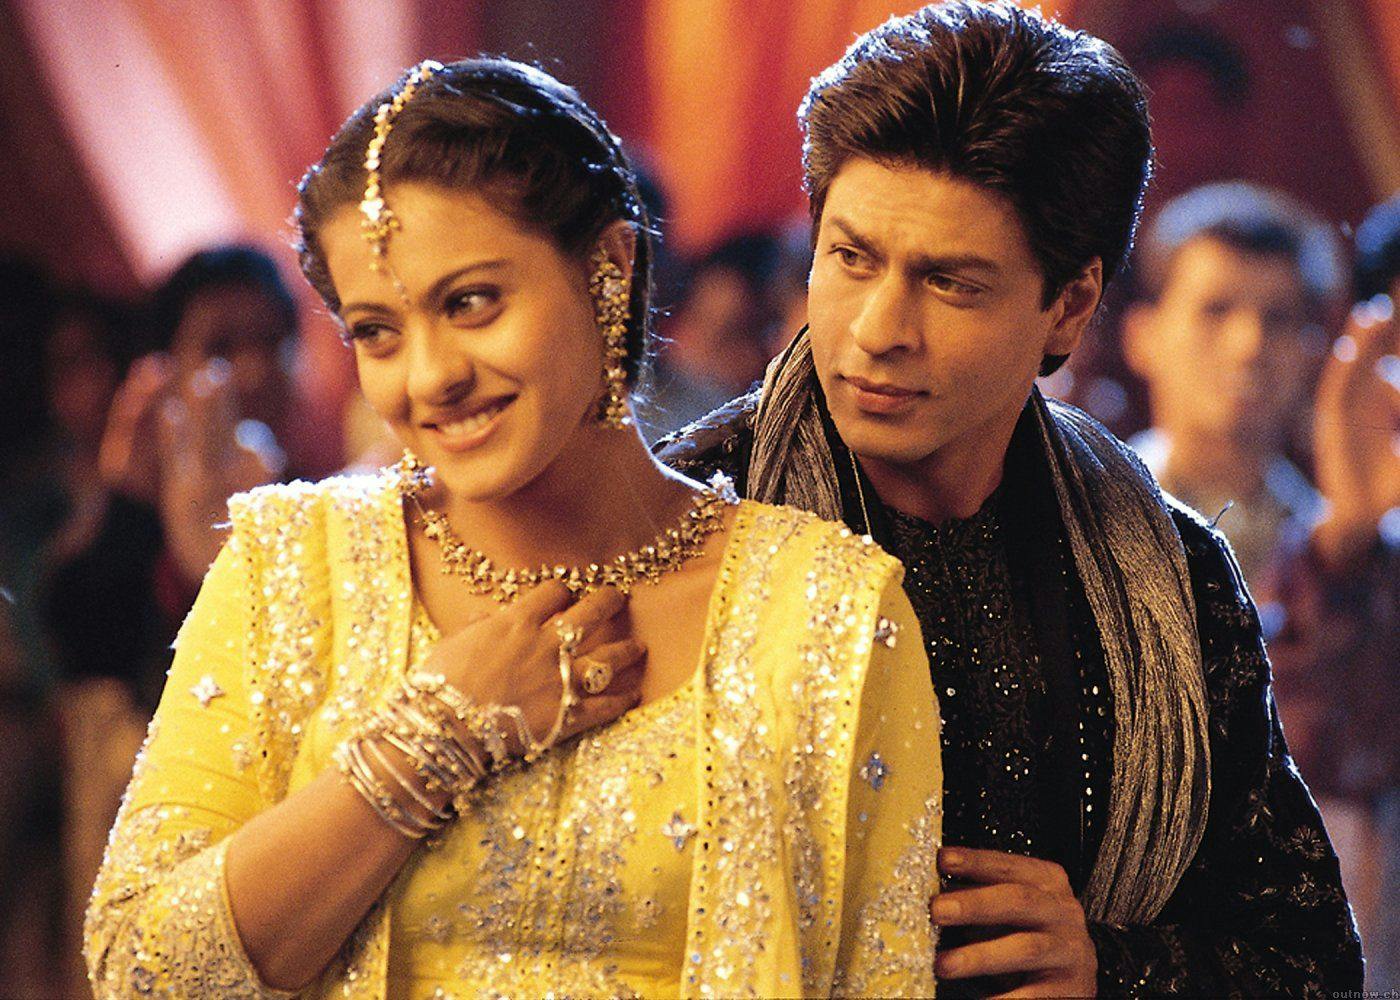 Where Has Bollywood’s Romance Gone?